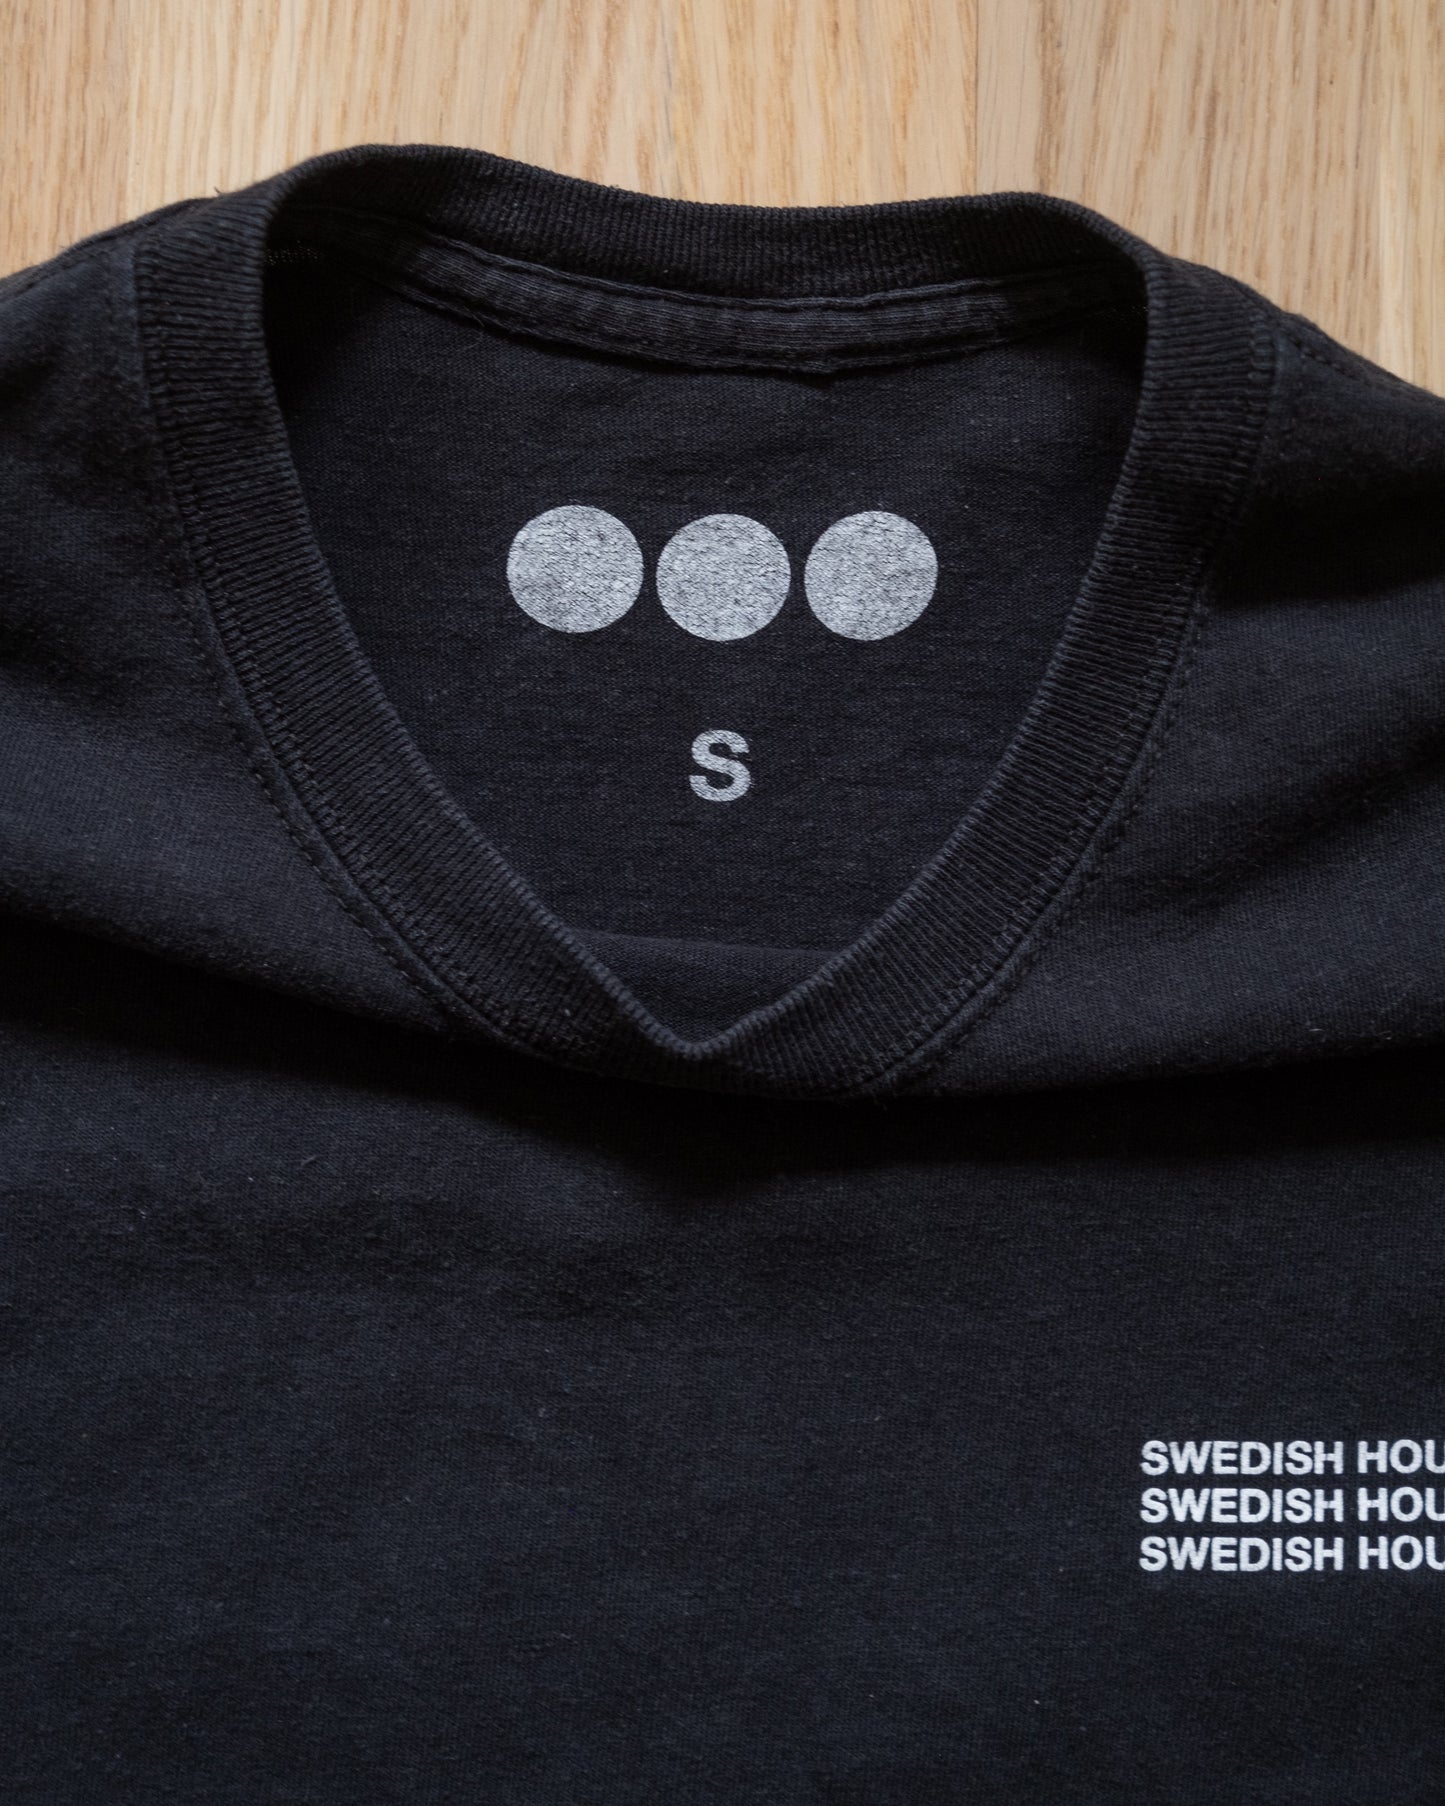 Swedish House Mafia Save The World Tour 2019 T-Shirt Size S